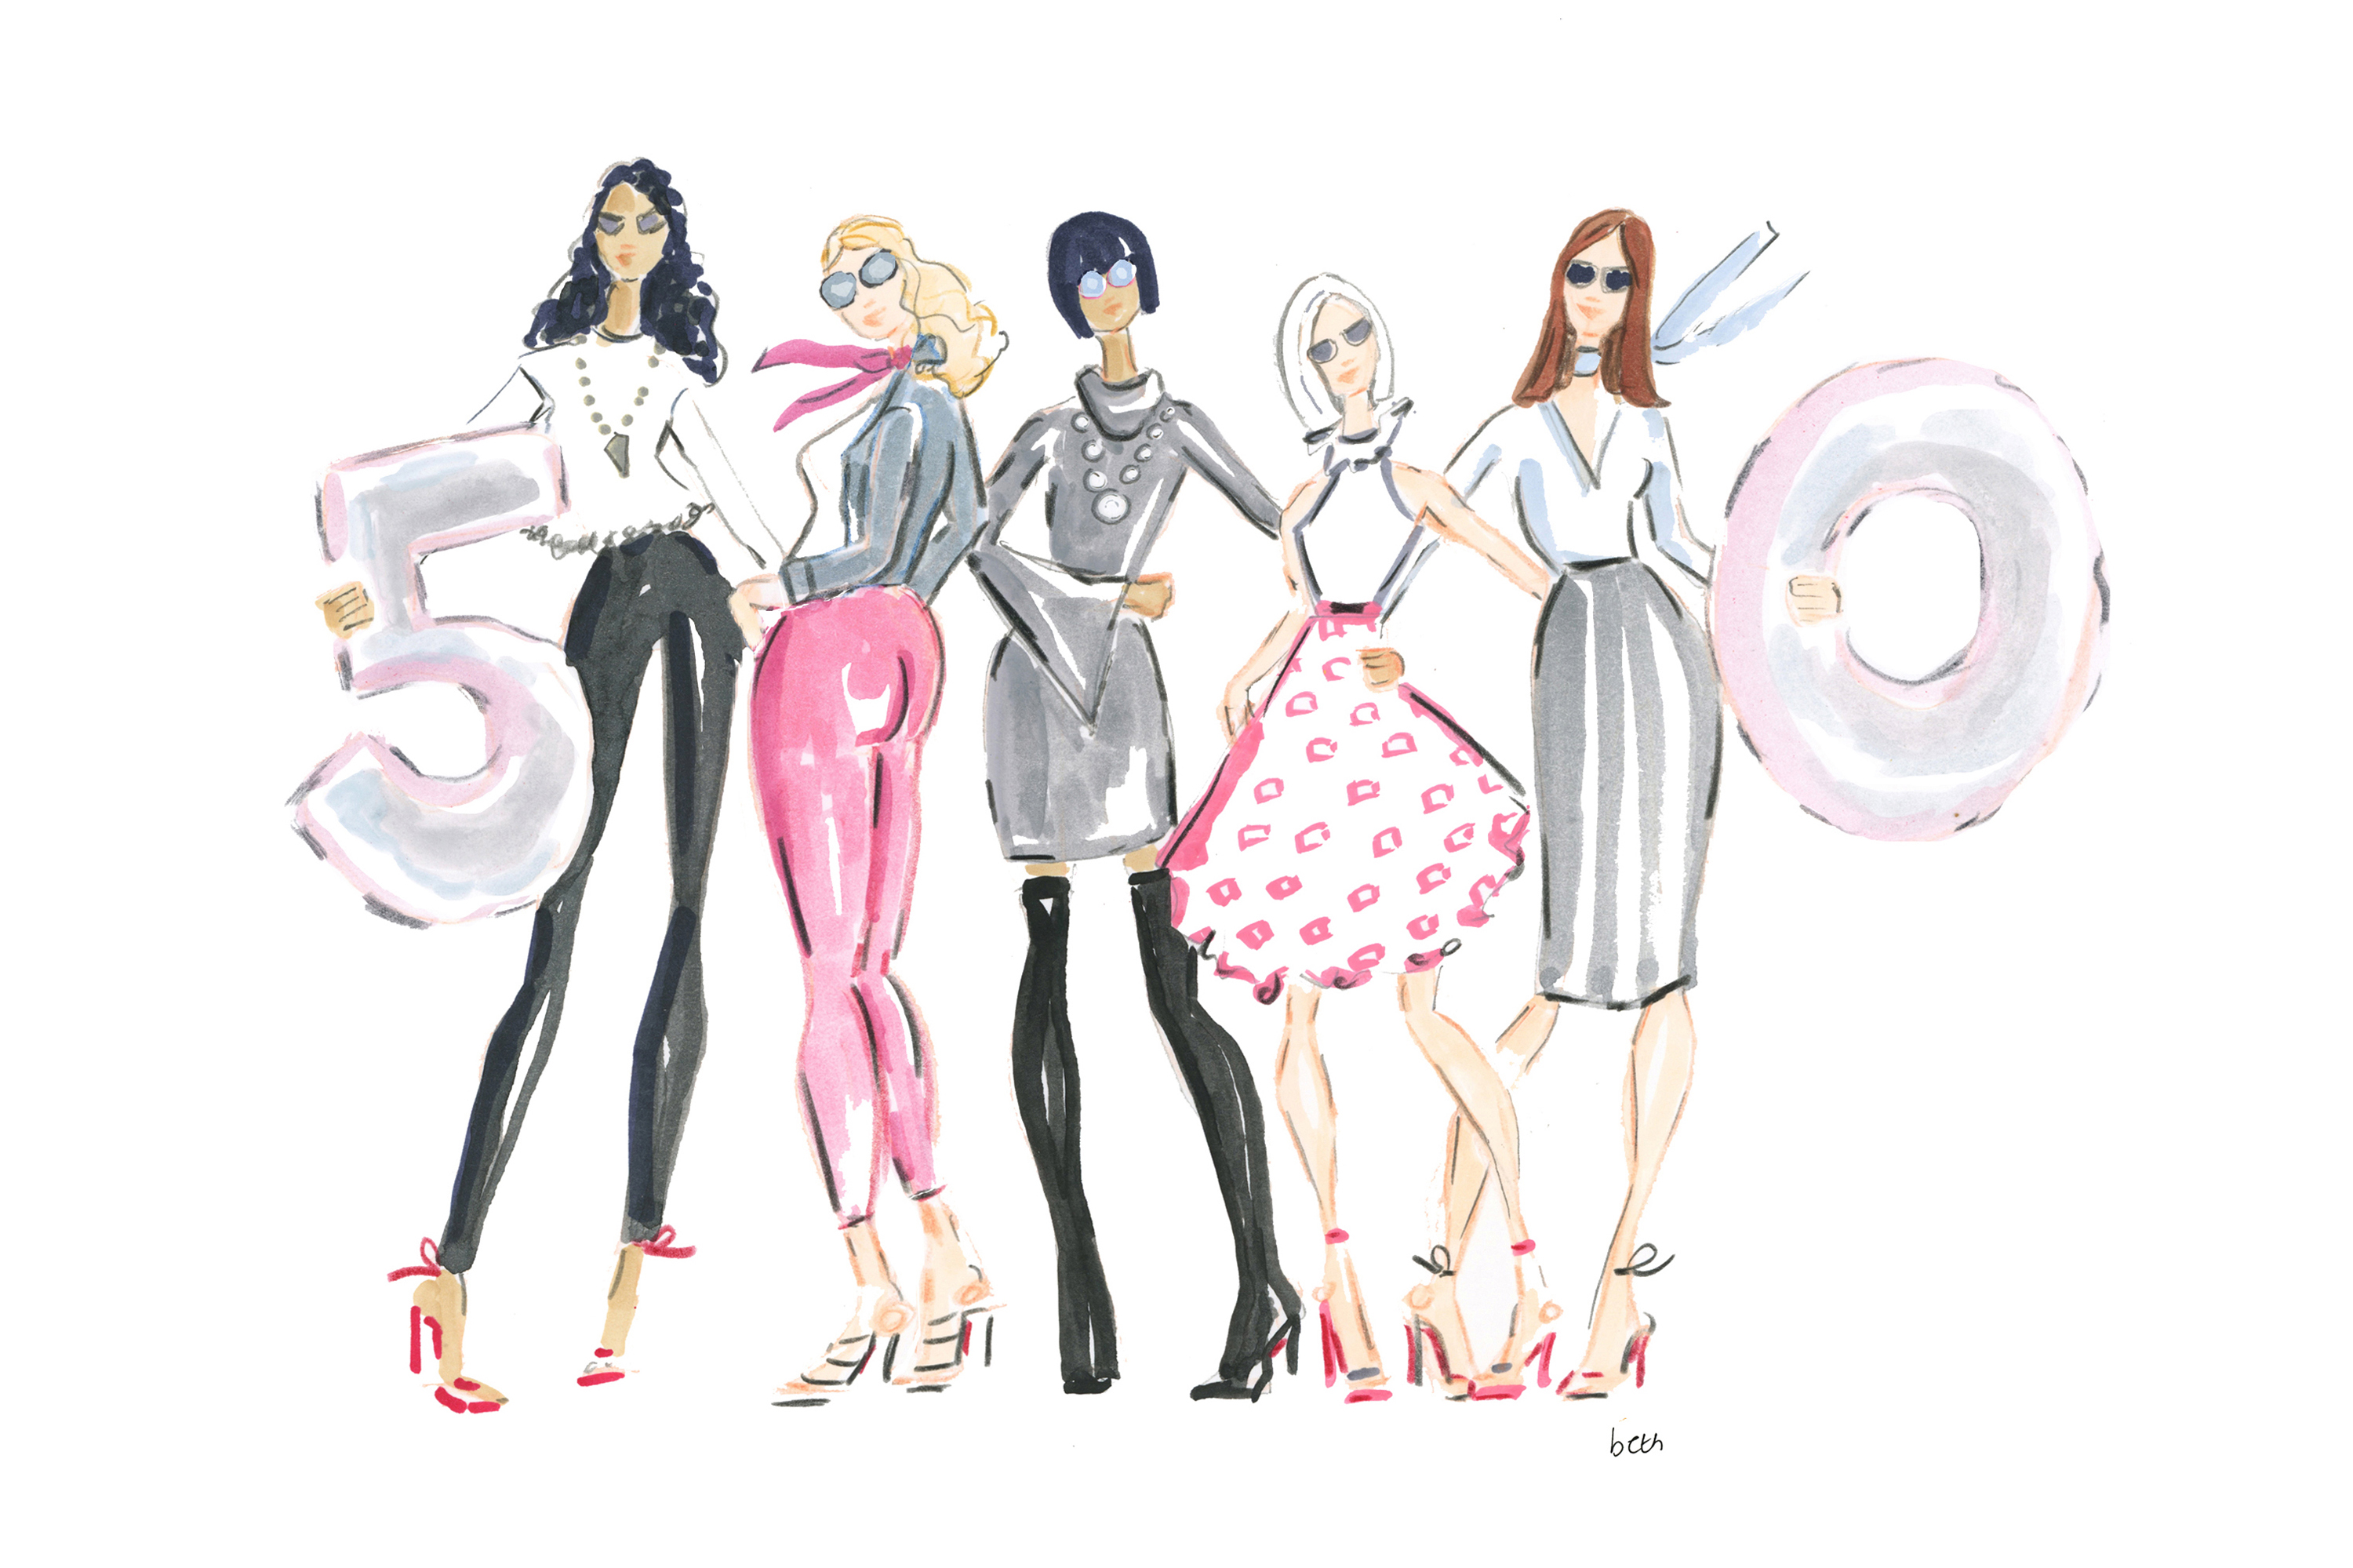 Illustration of 5 stylish women representing the Fierce 50